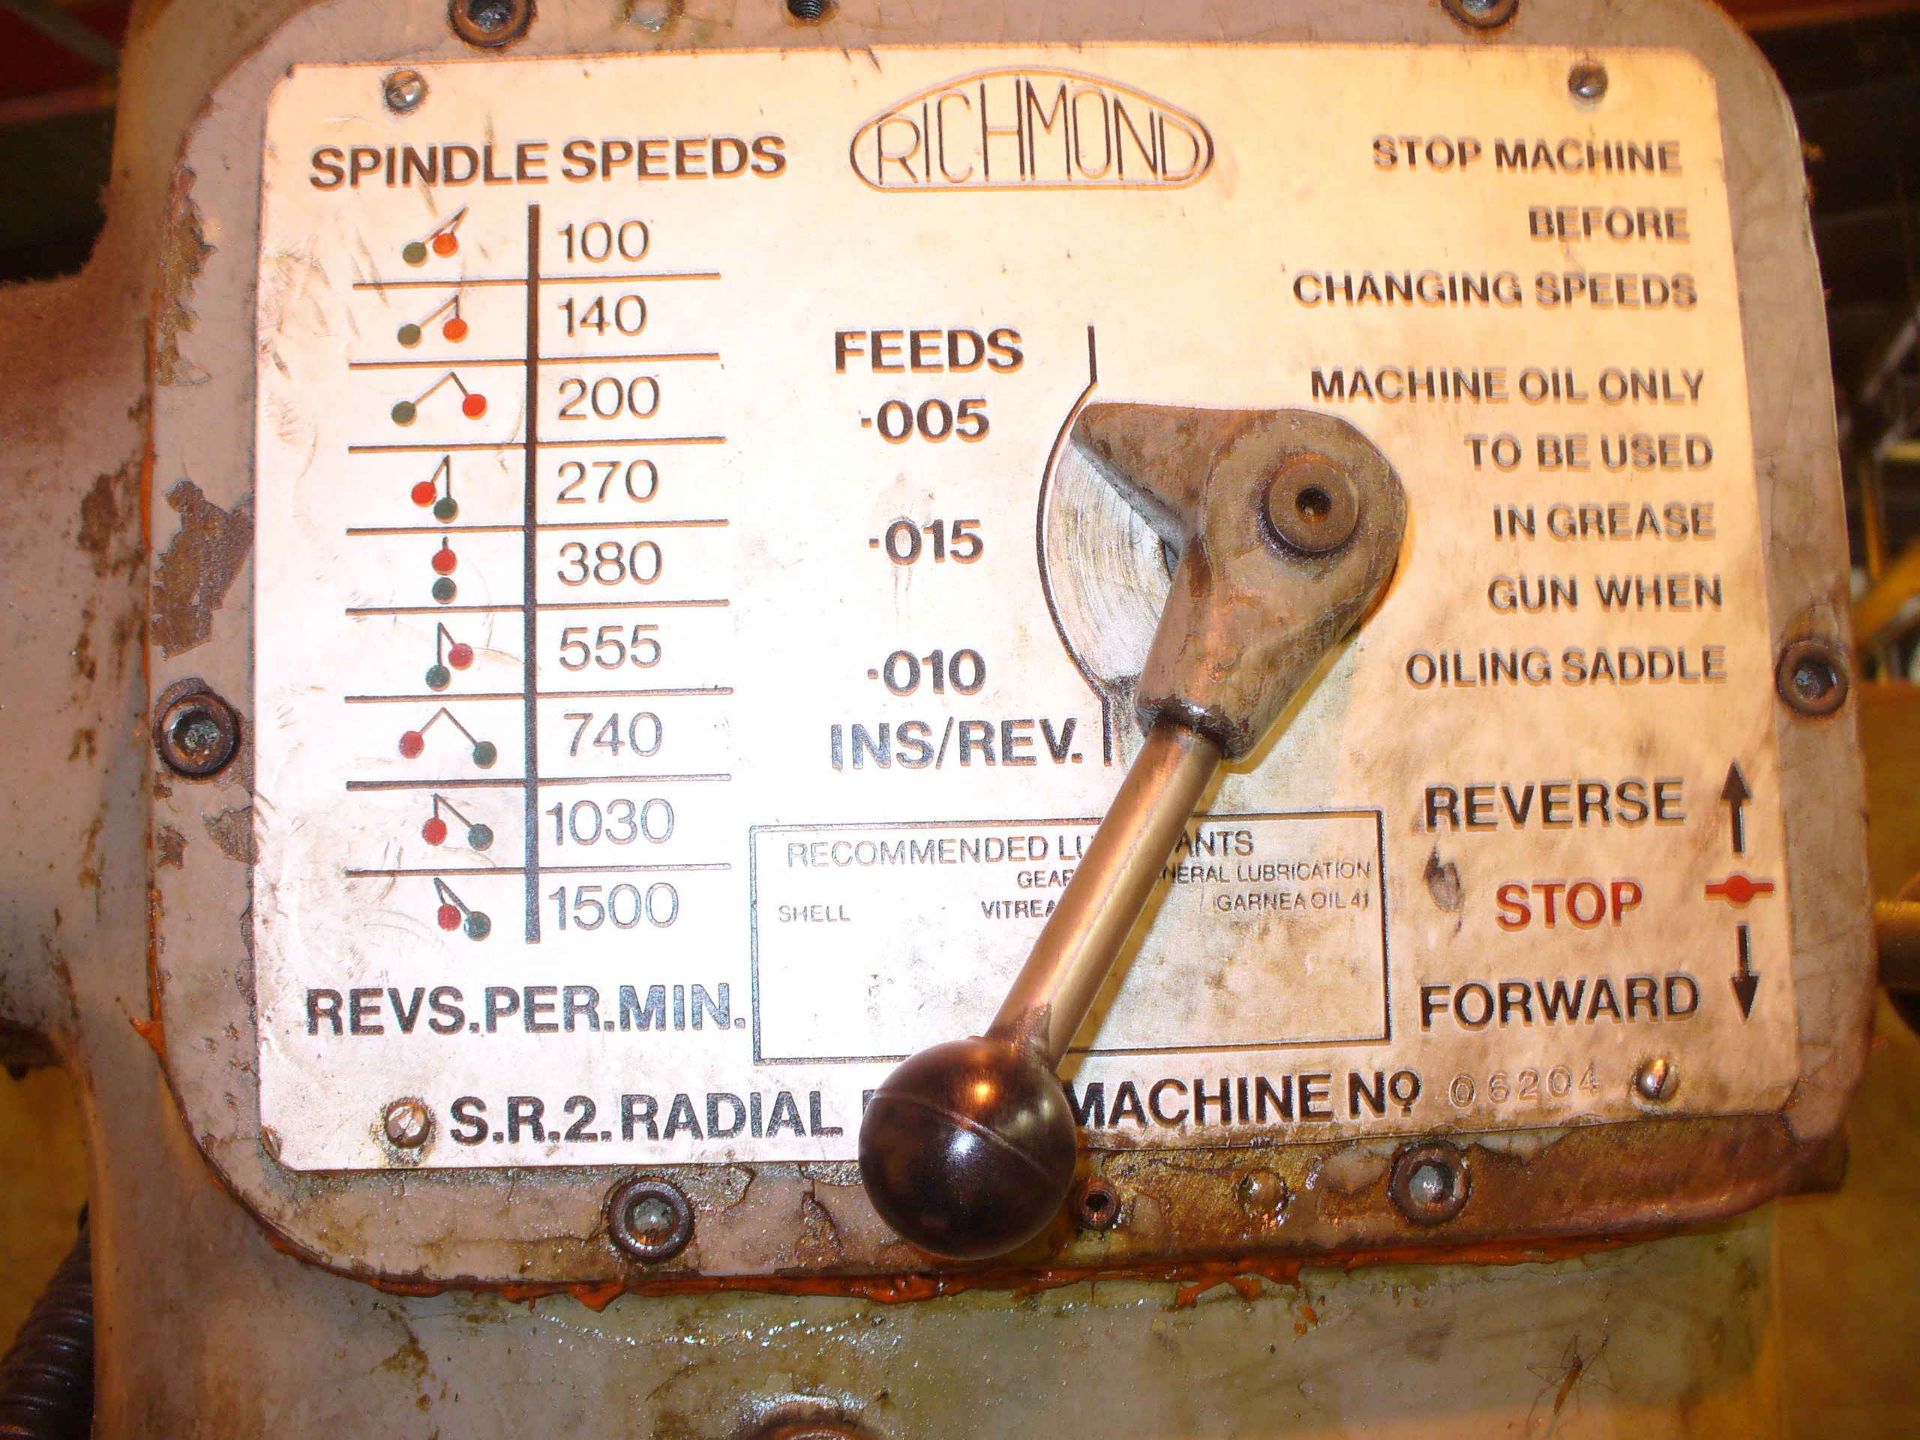 Richmond SR2 RADIAL ARM DRILL - 100/1500rpm, serial no 06204 - Image 3 of 4